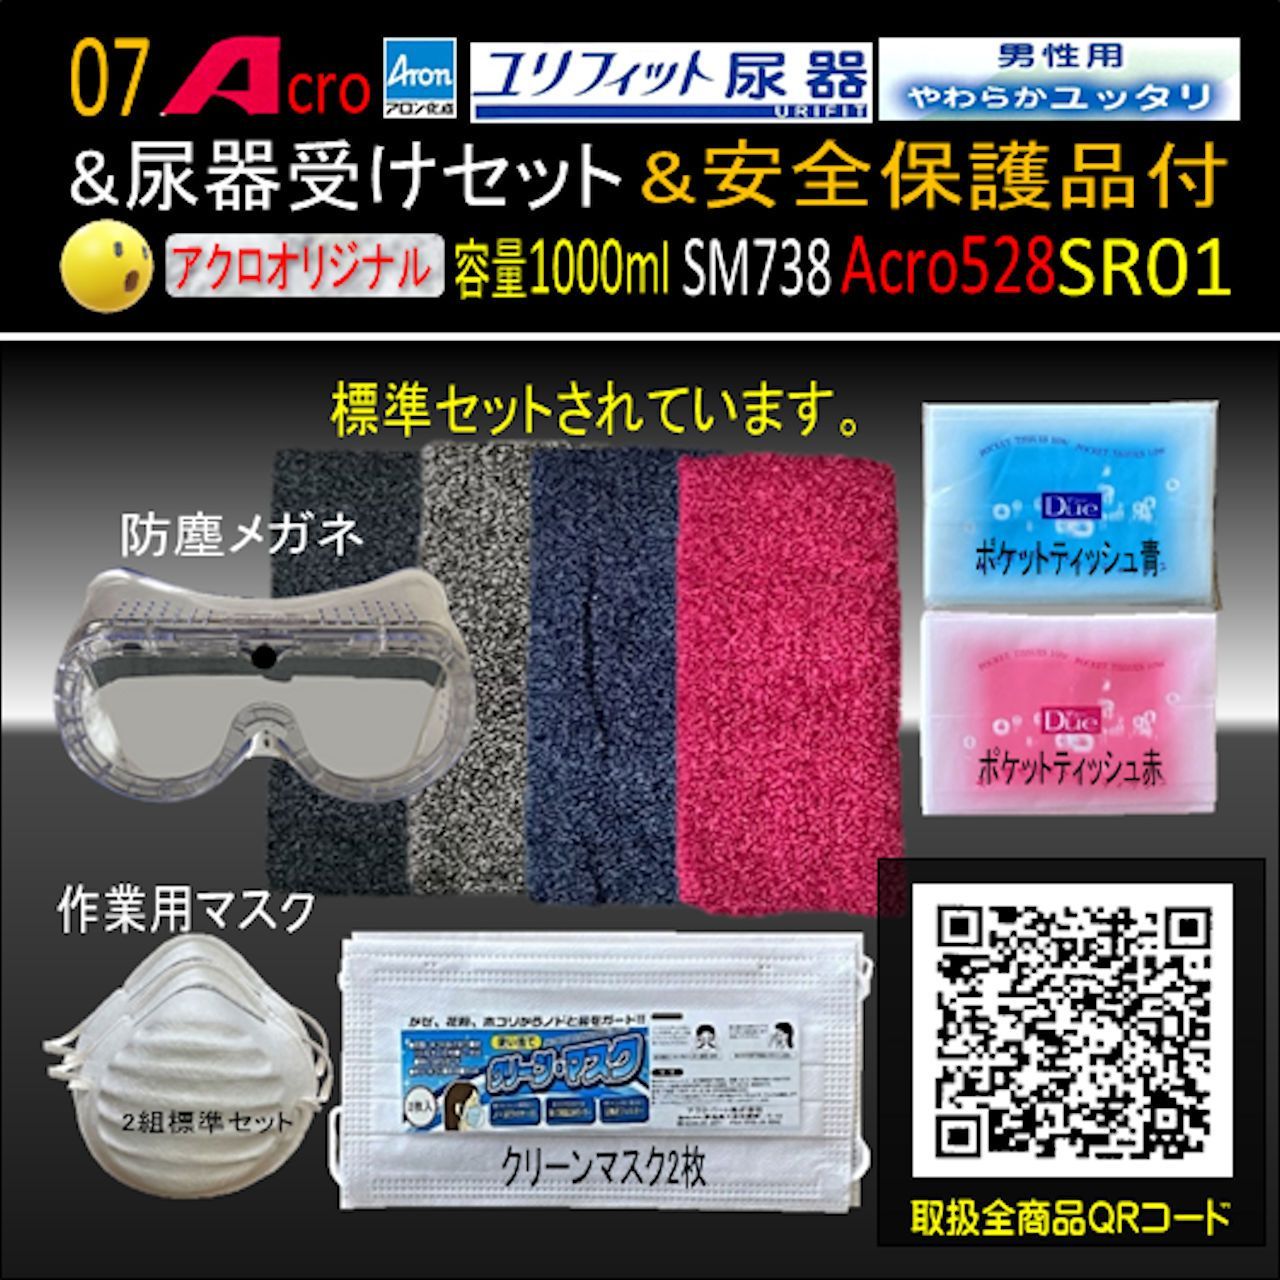 Acro528ユリフィット尿器男性用&尿器受けセット&衛生・安全品付SR01